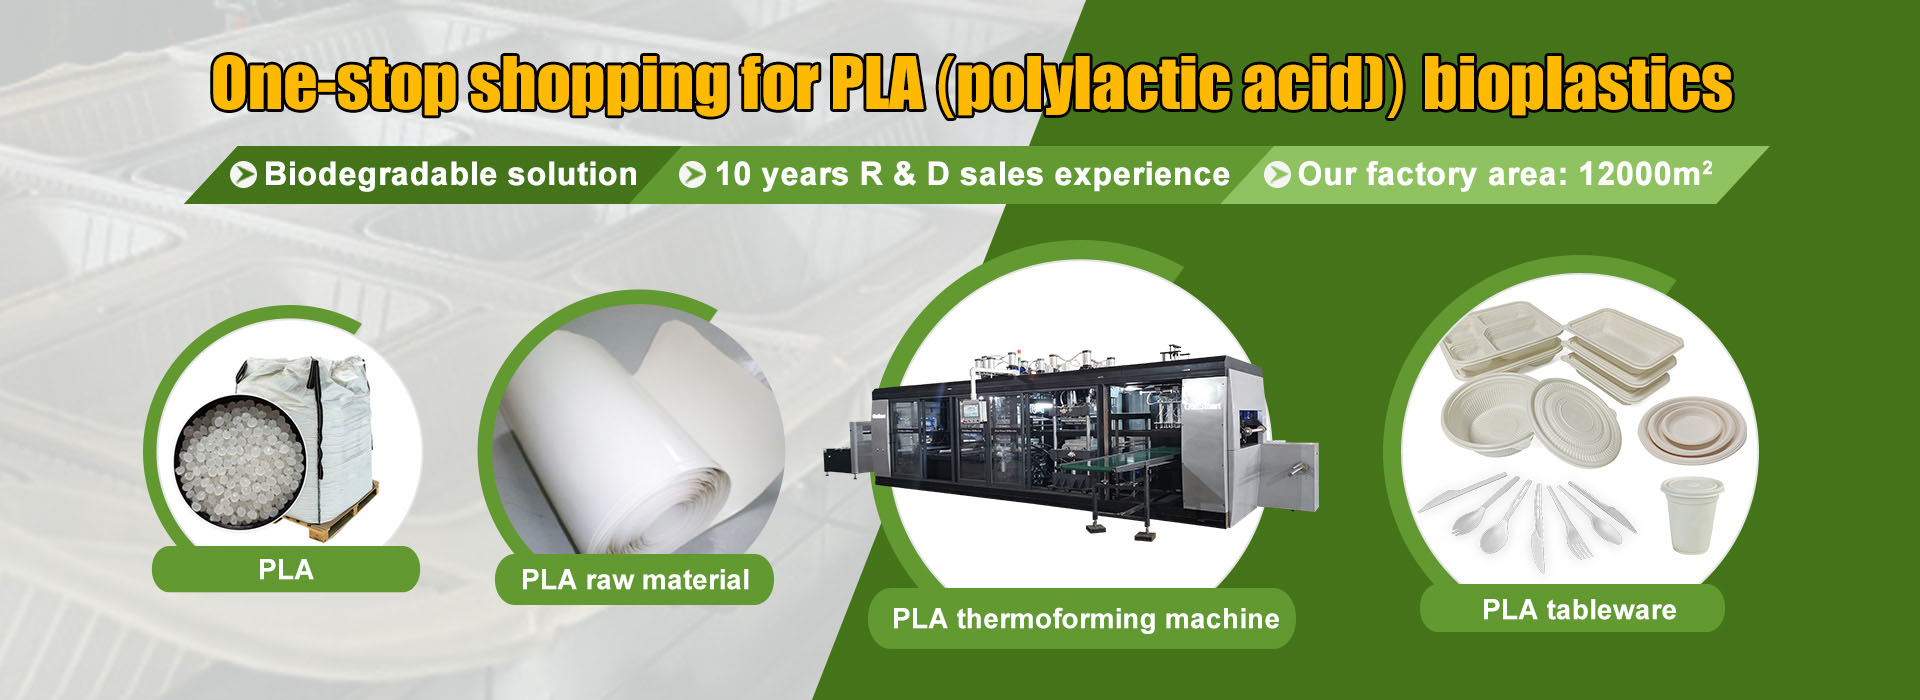 One-stop-shopping-för-PLA (polymjölksyra)-bioplaster